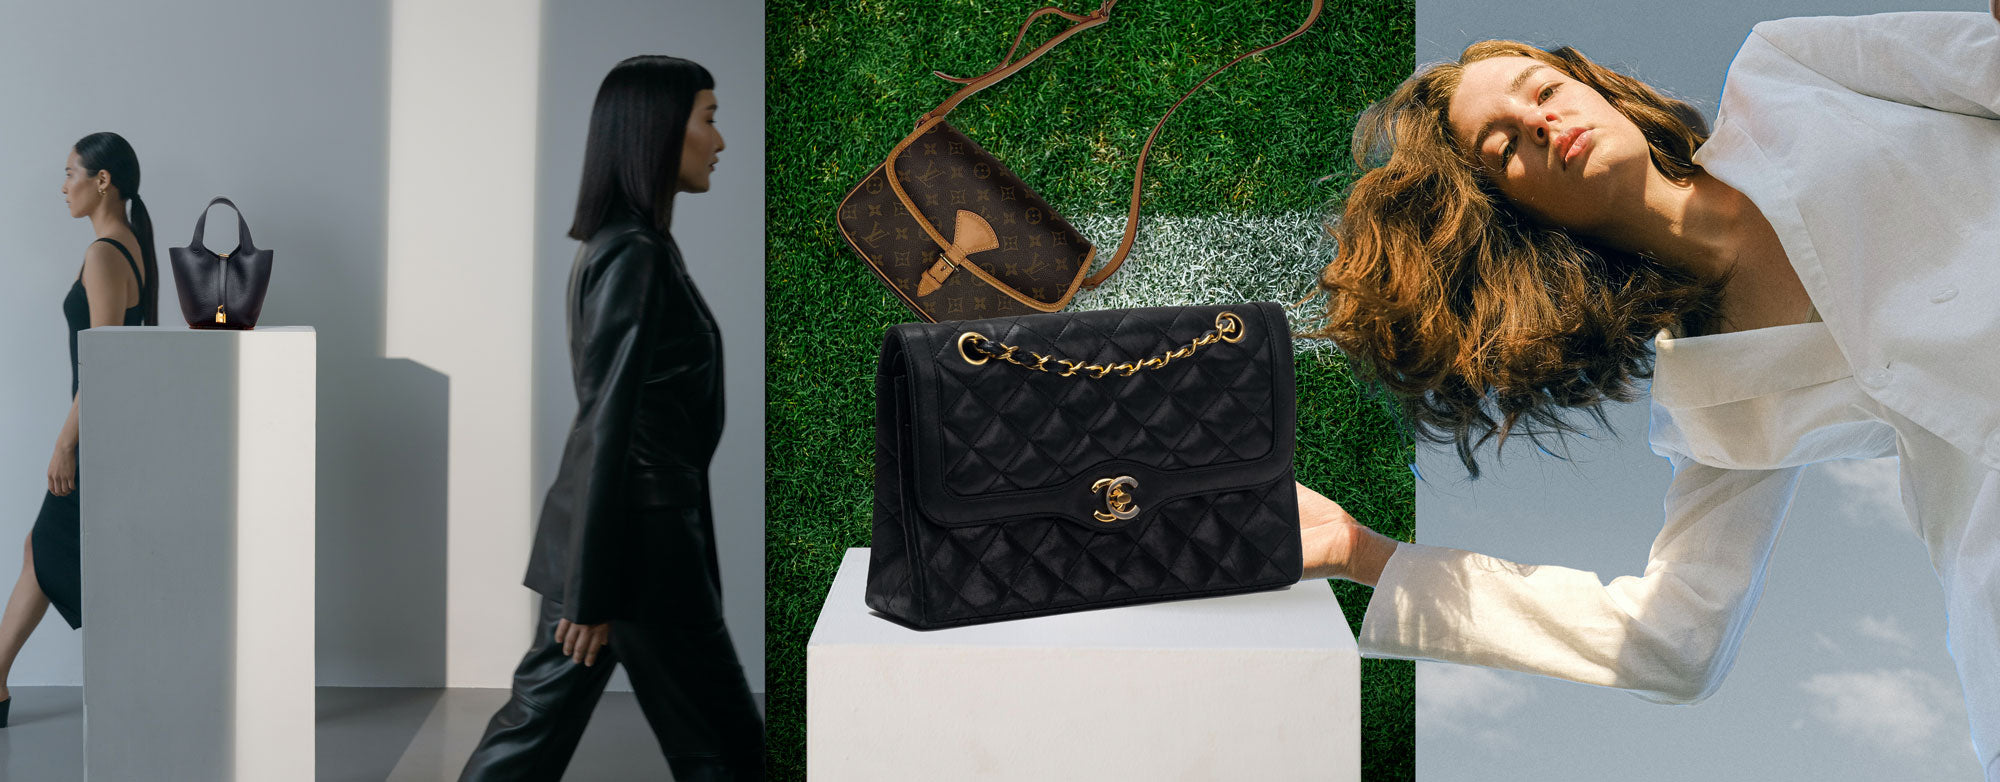 Louis Vuitton Beige Handbag for Sale in Online Auctions